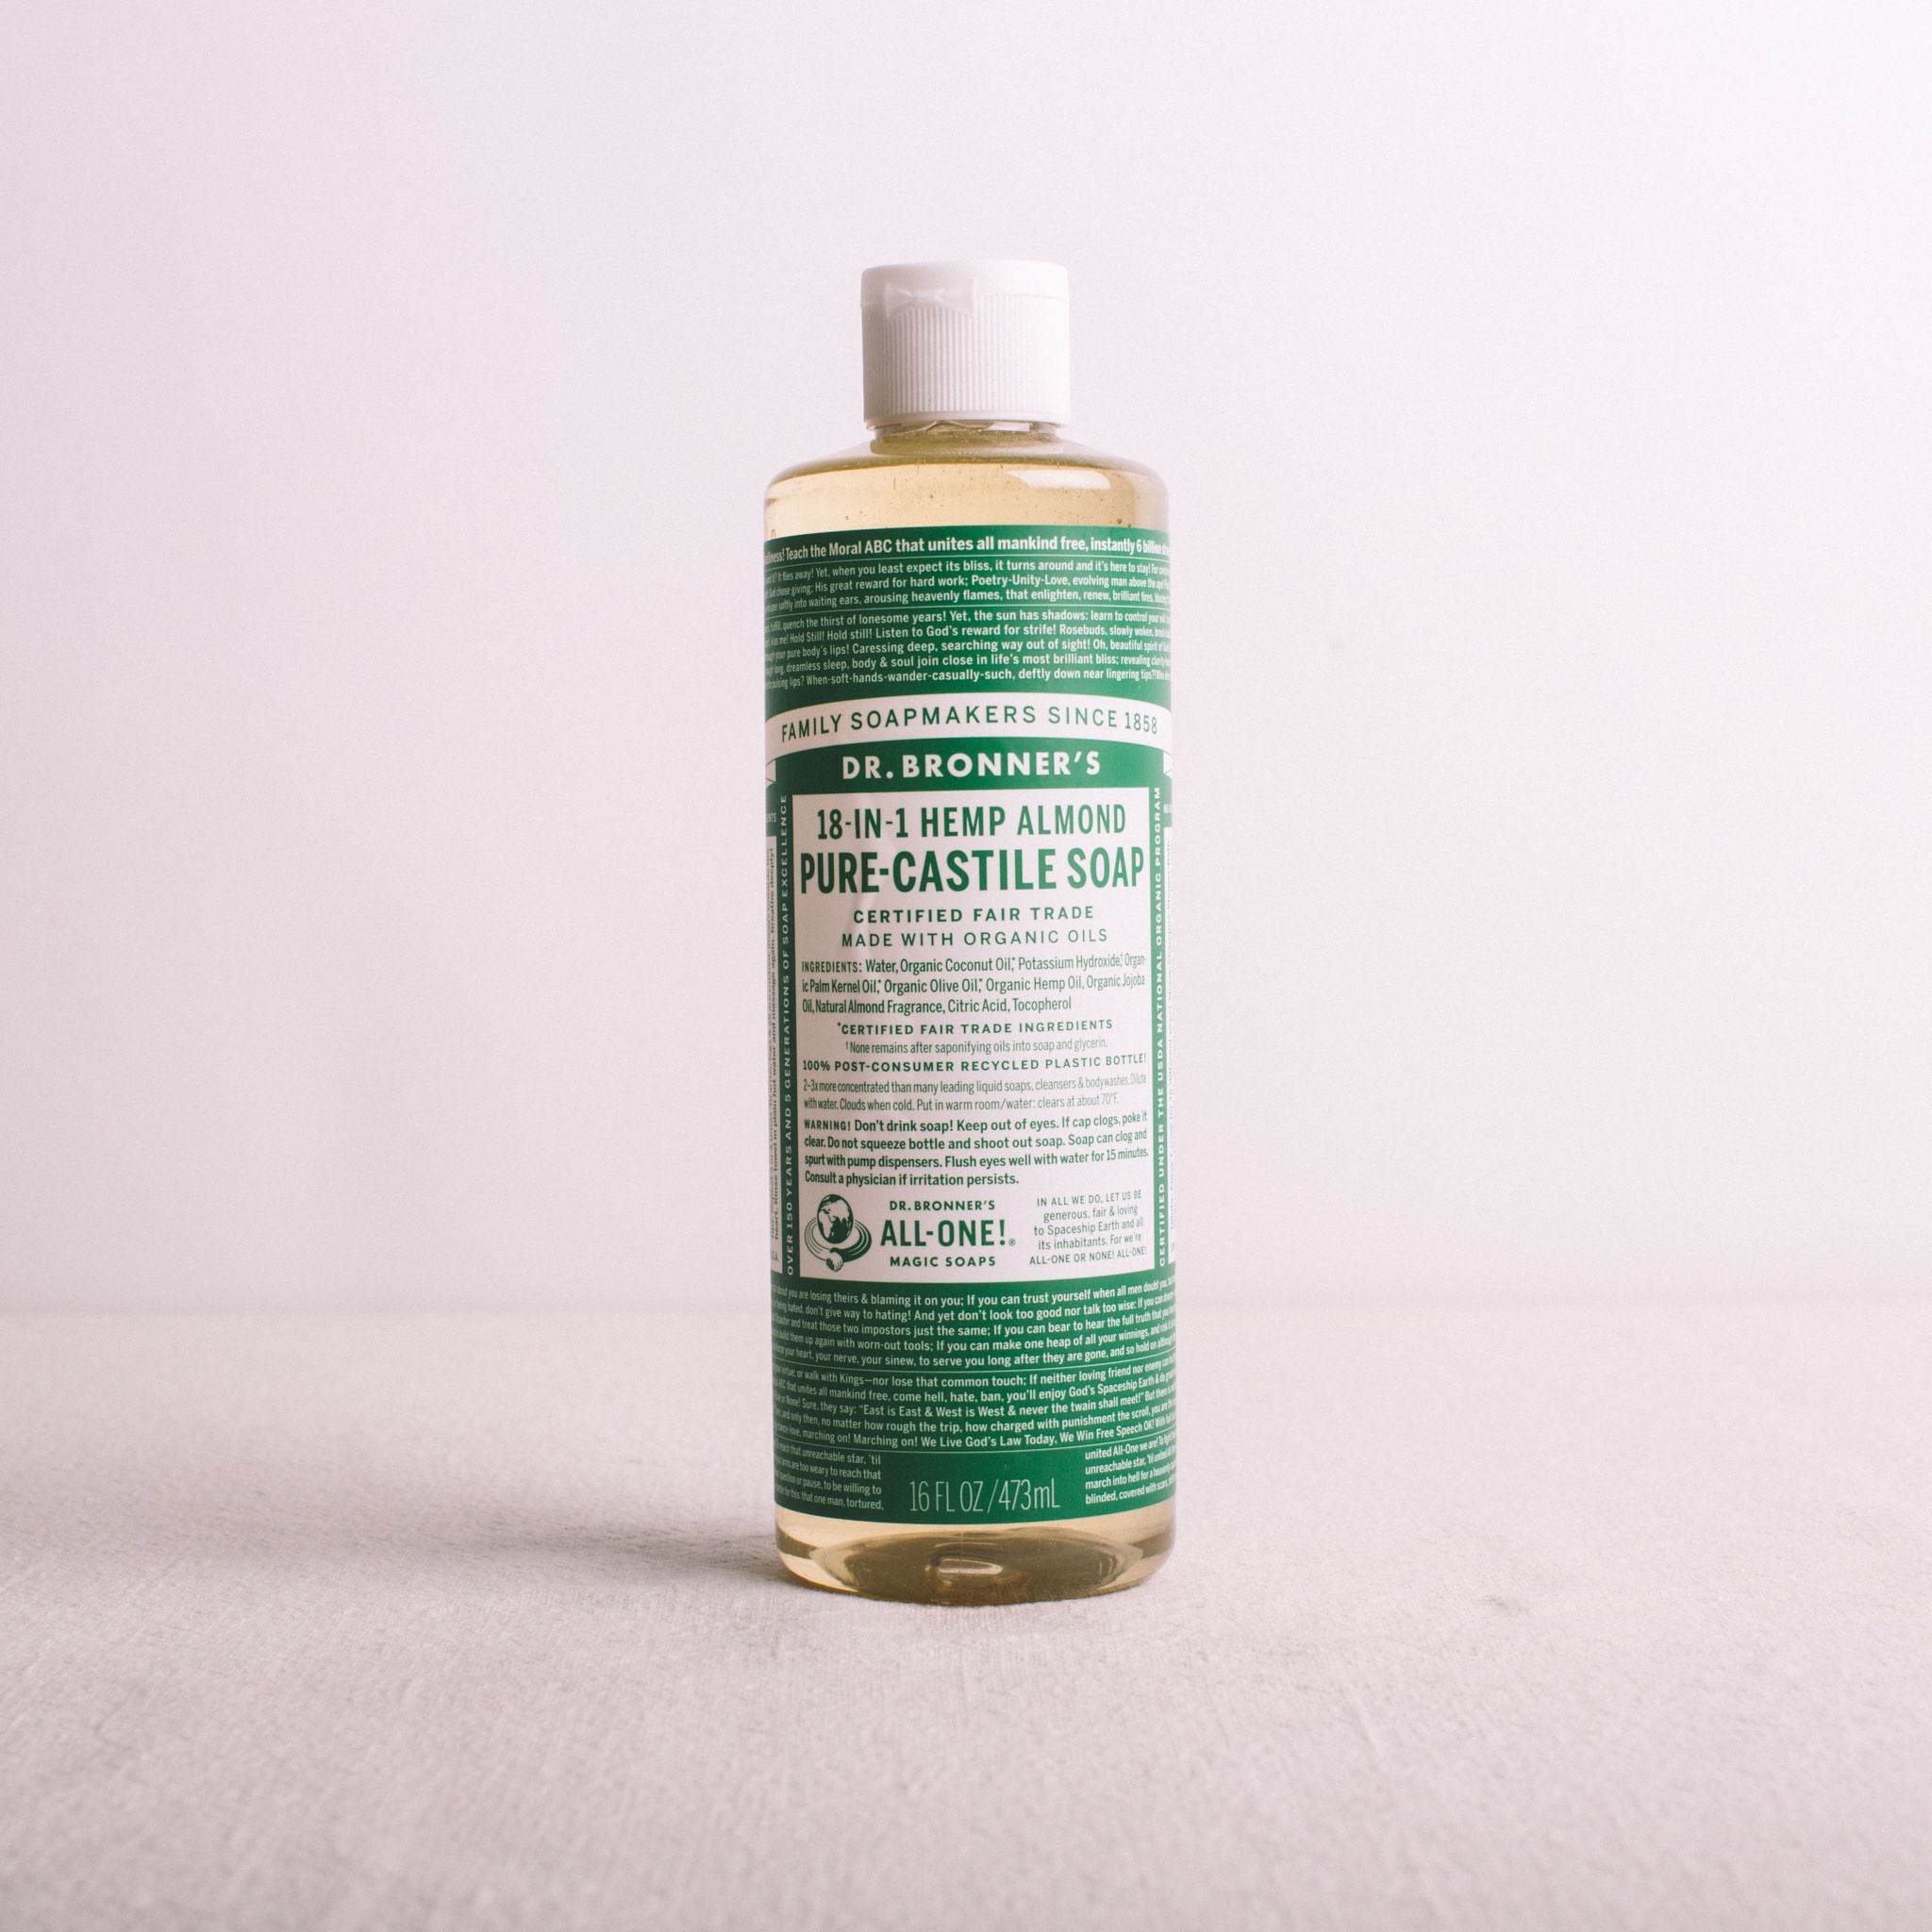 PURE-CASTILE LIQUID SOAP || DR BRONNER'S